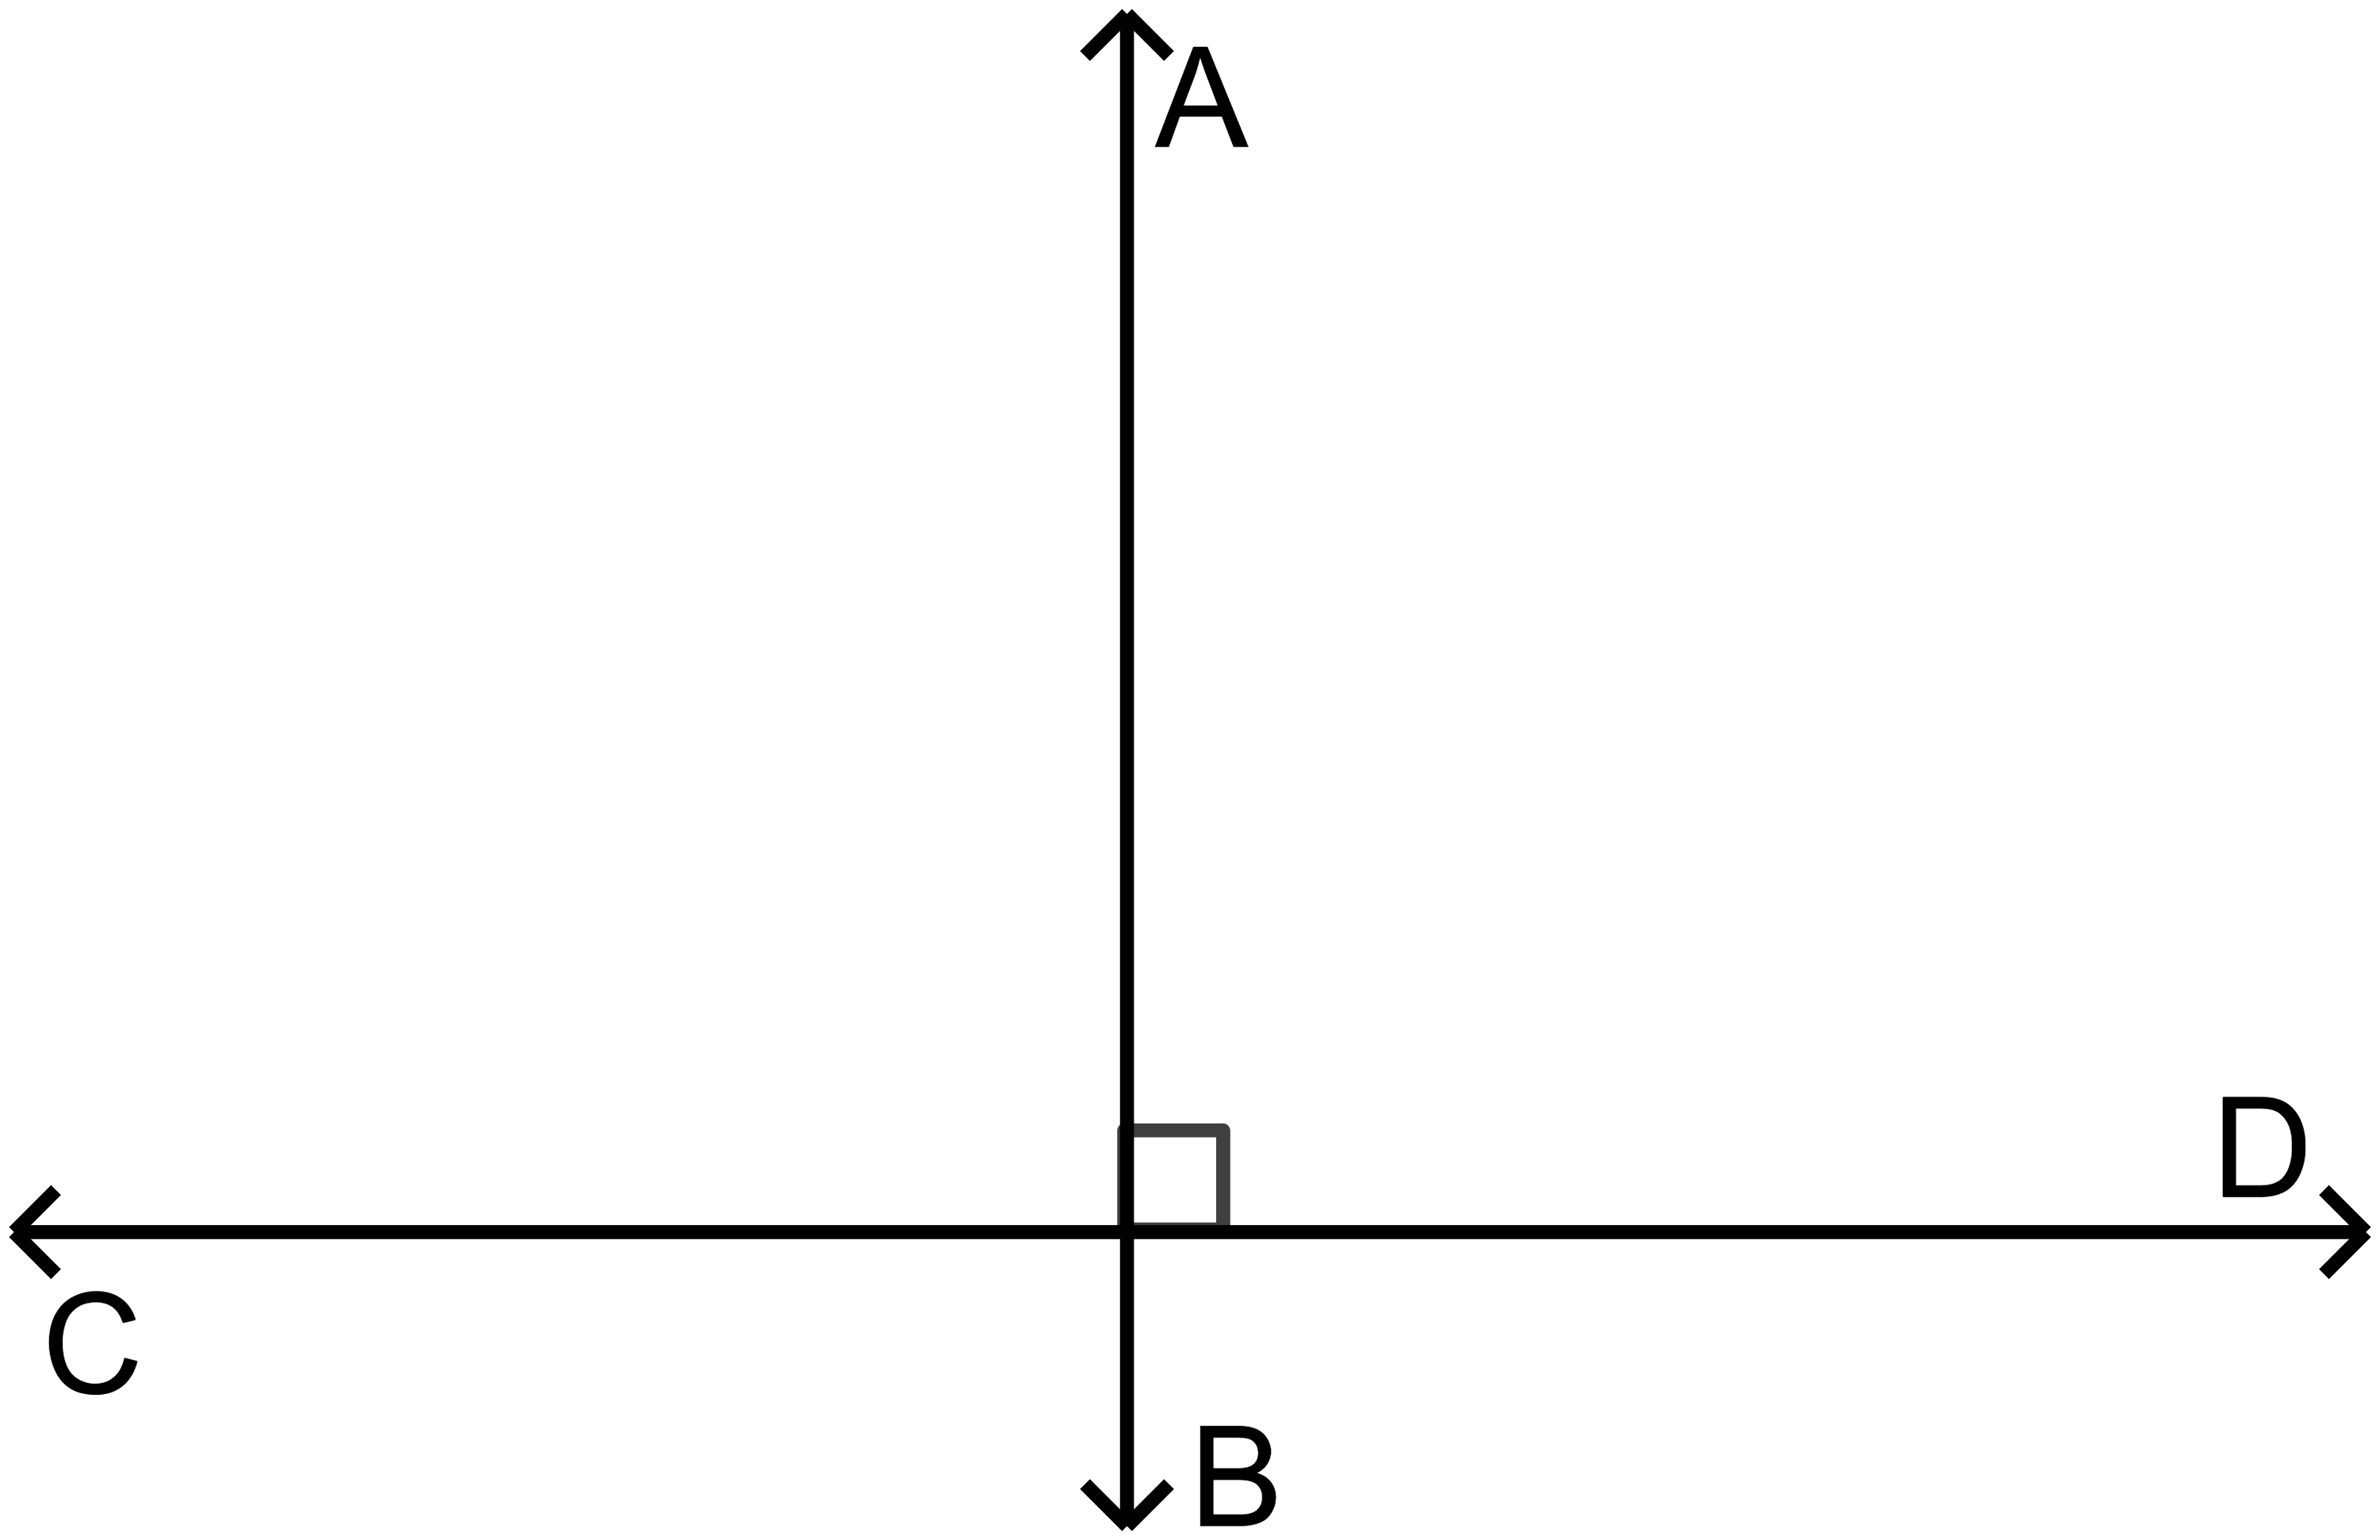 Perpendicular bisector theorem fig